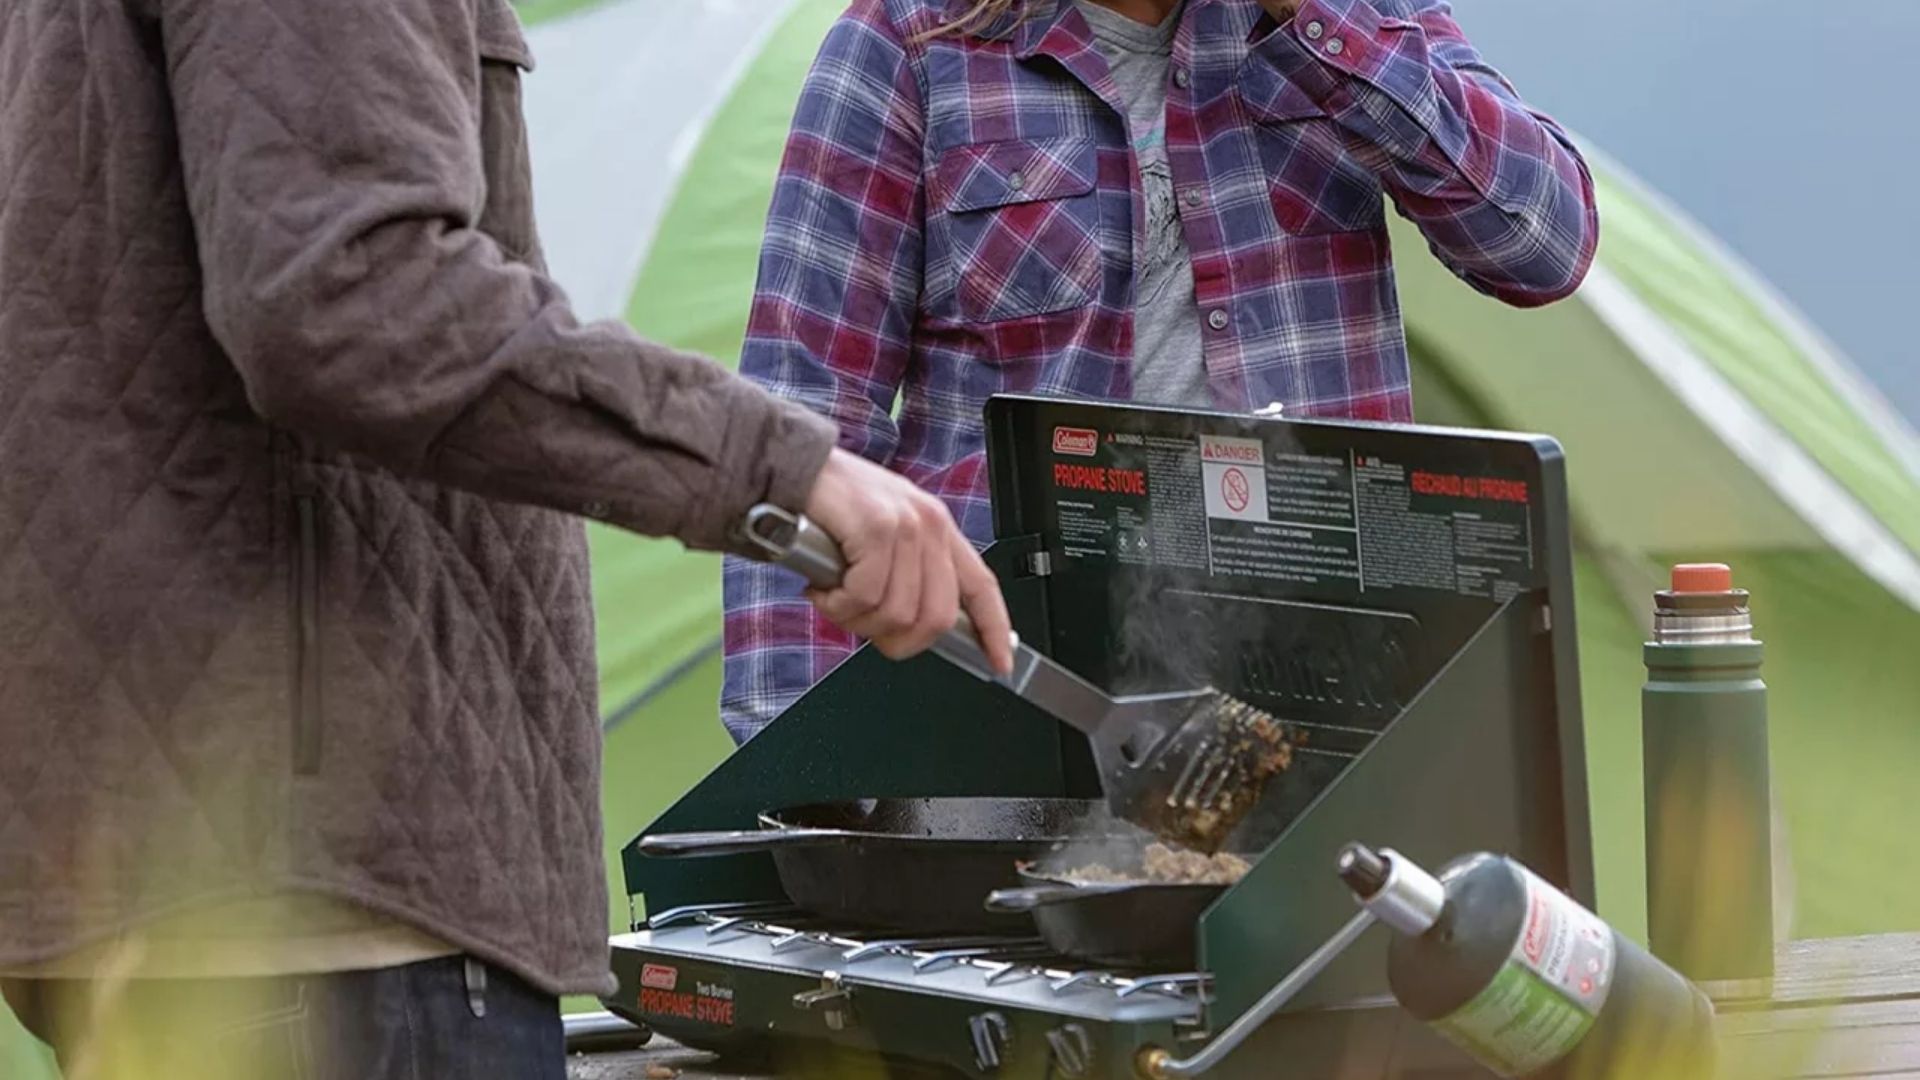 Best camping stoves 2022: CampChef, Coleman, MSR